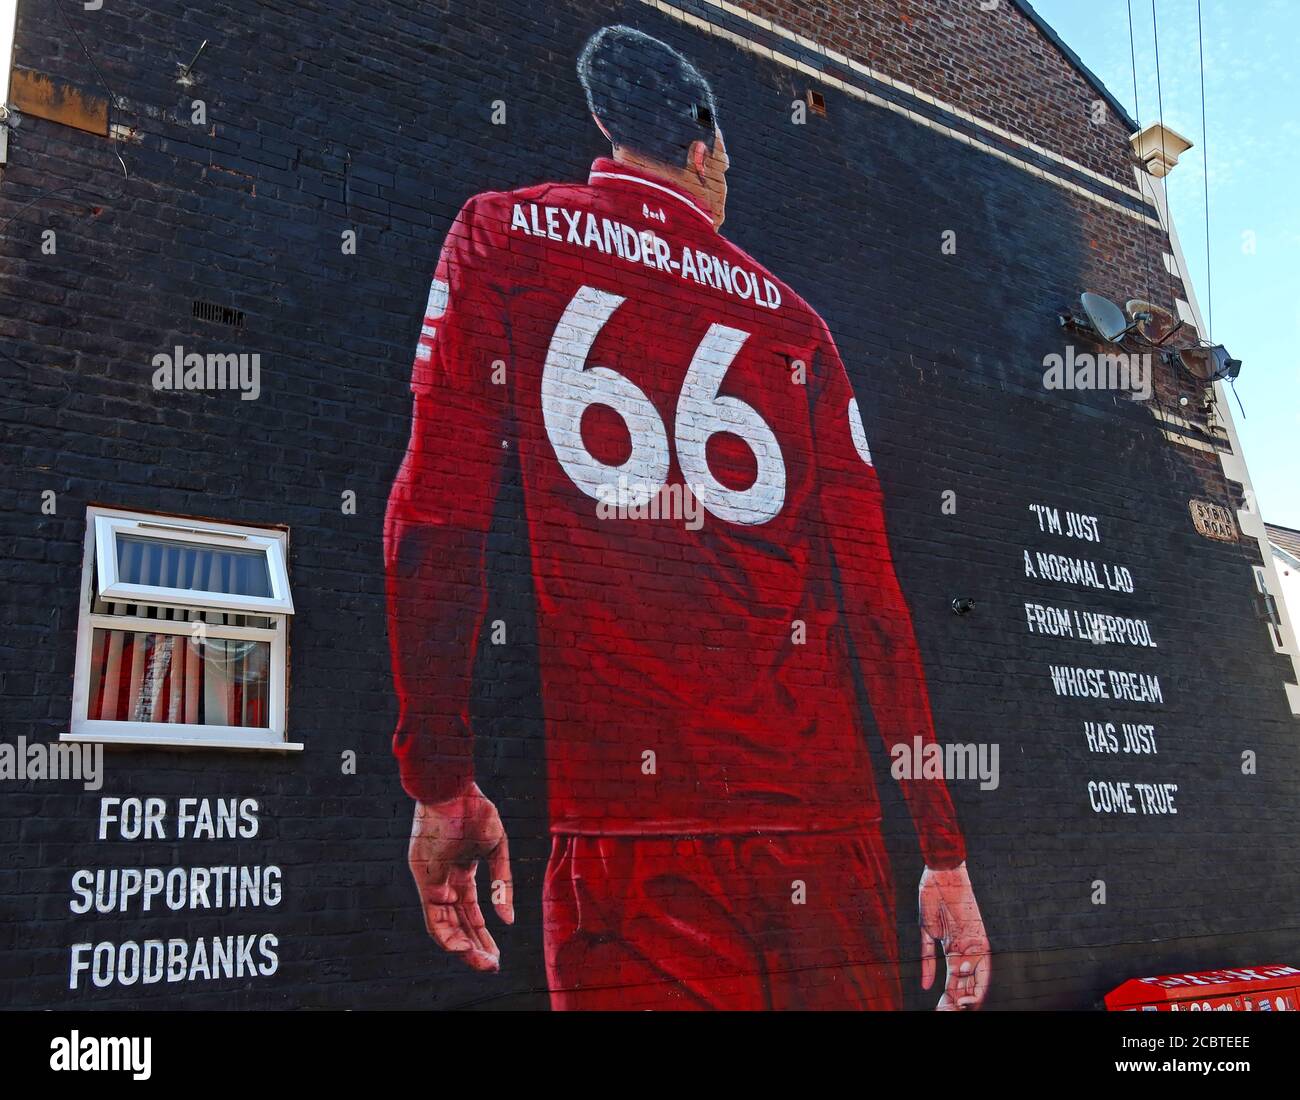 Alexander-Arnold 66 foodbanks mural,LFC,Liverpool Football Club, Anfield, Premier League, Merseyside,North West England, UK, L4 2UZ Stock Photo